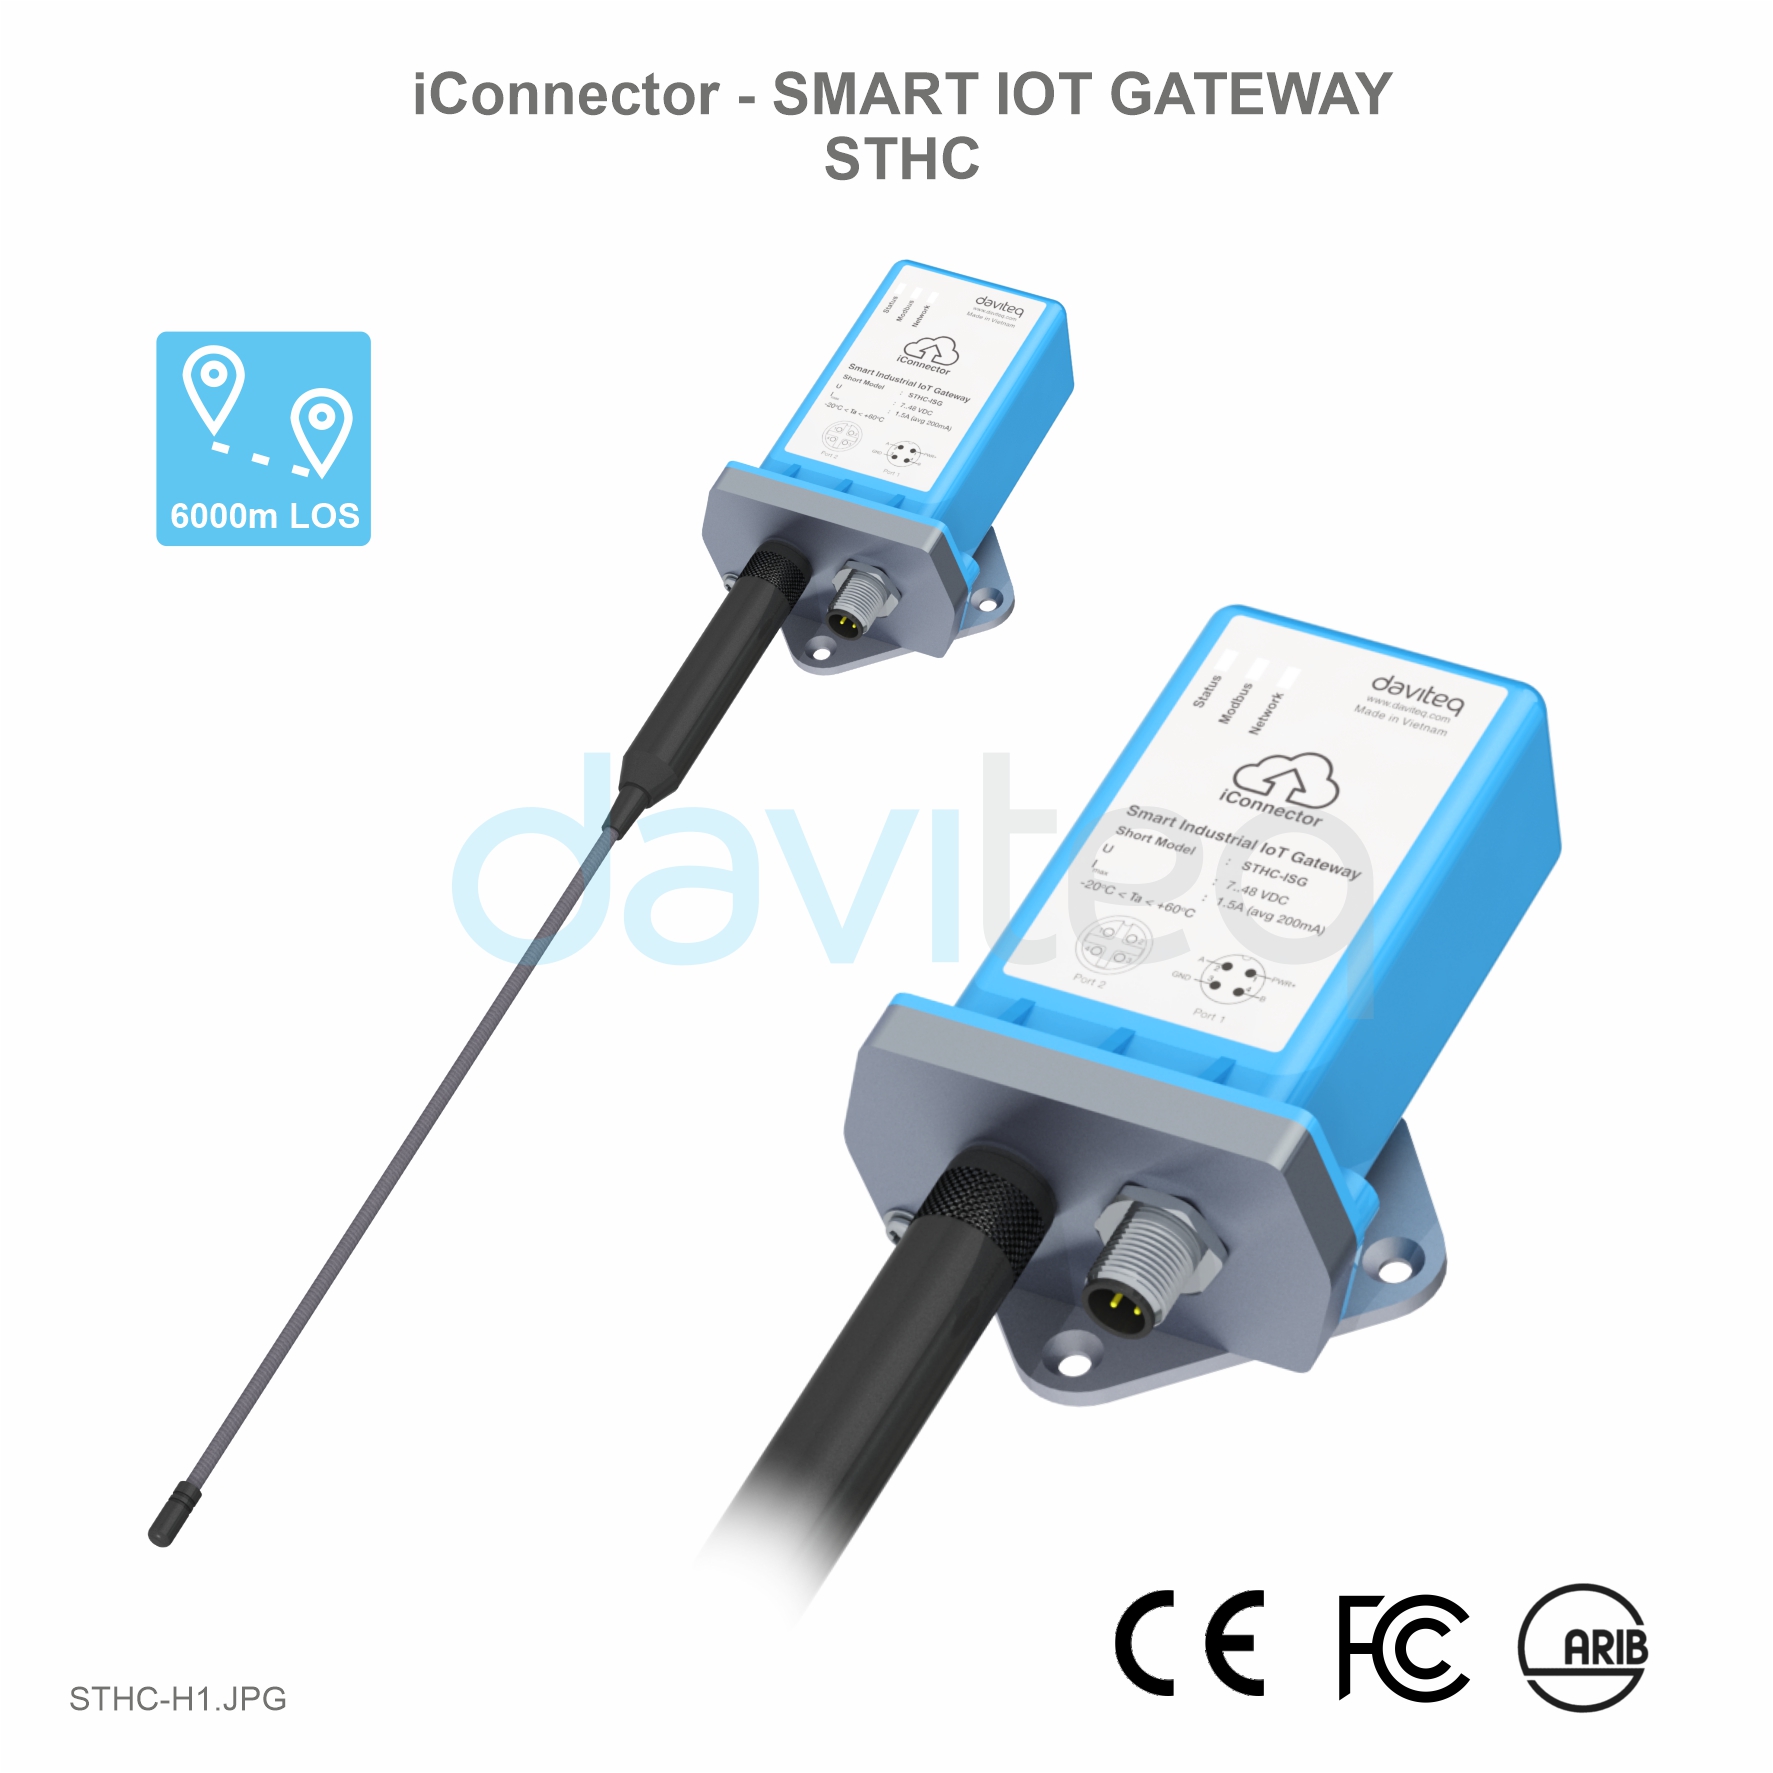 Smart IoT Gateway - iConnector